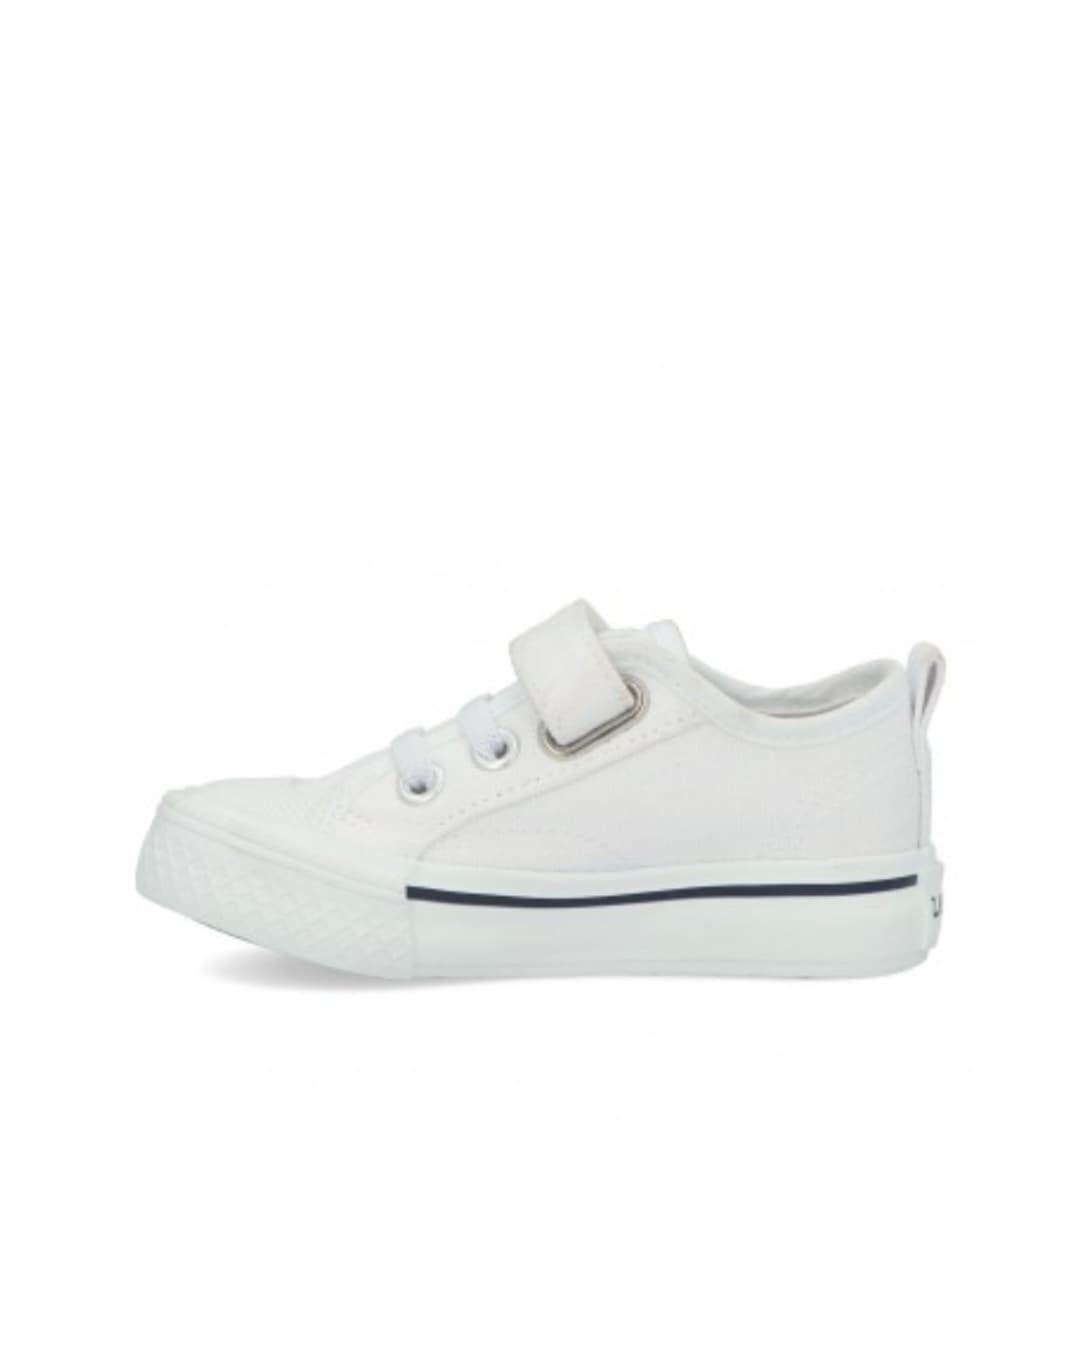 Levi's Unisex White Canvas Sneakers Kids - Image 4